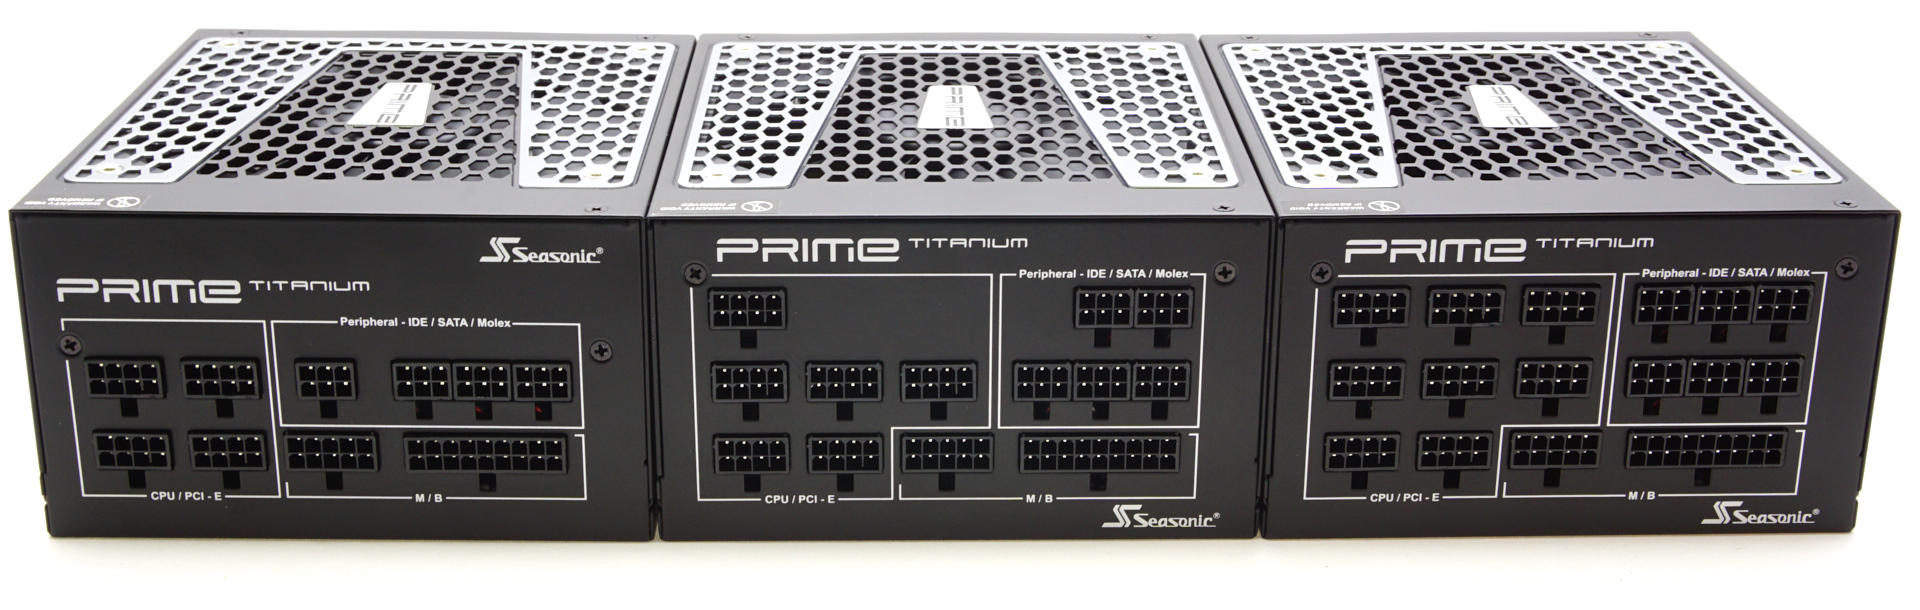 Seasonic Usa PRIMETX-750 Power Supply